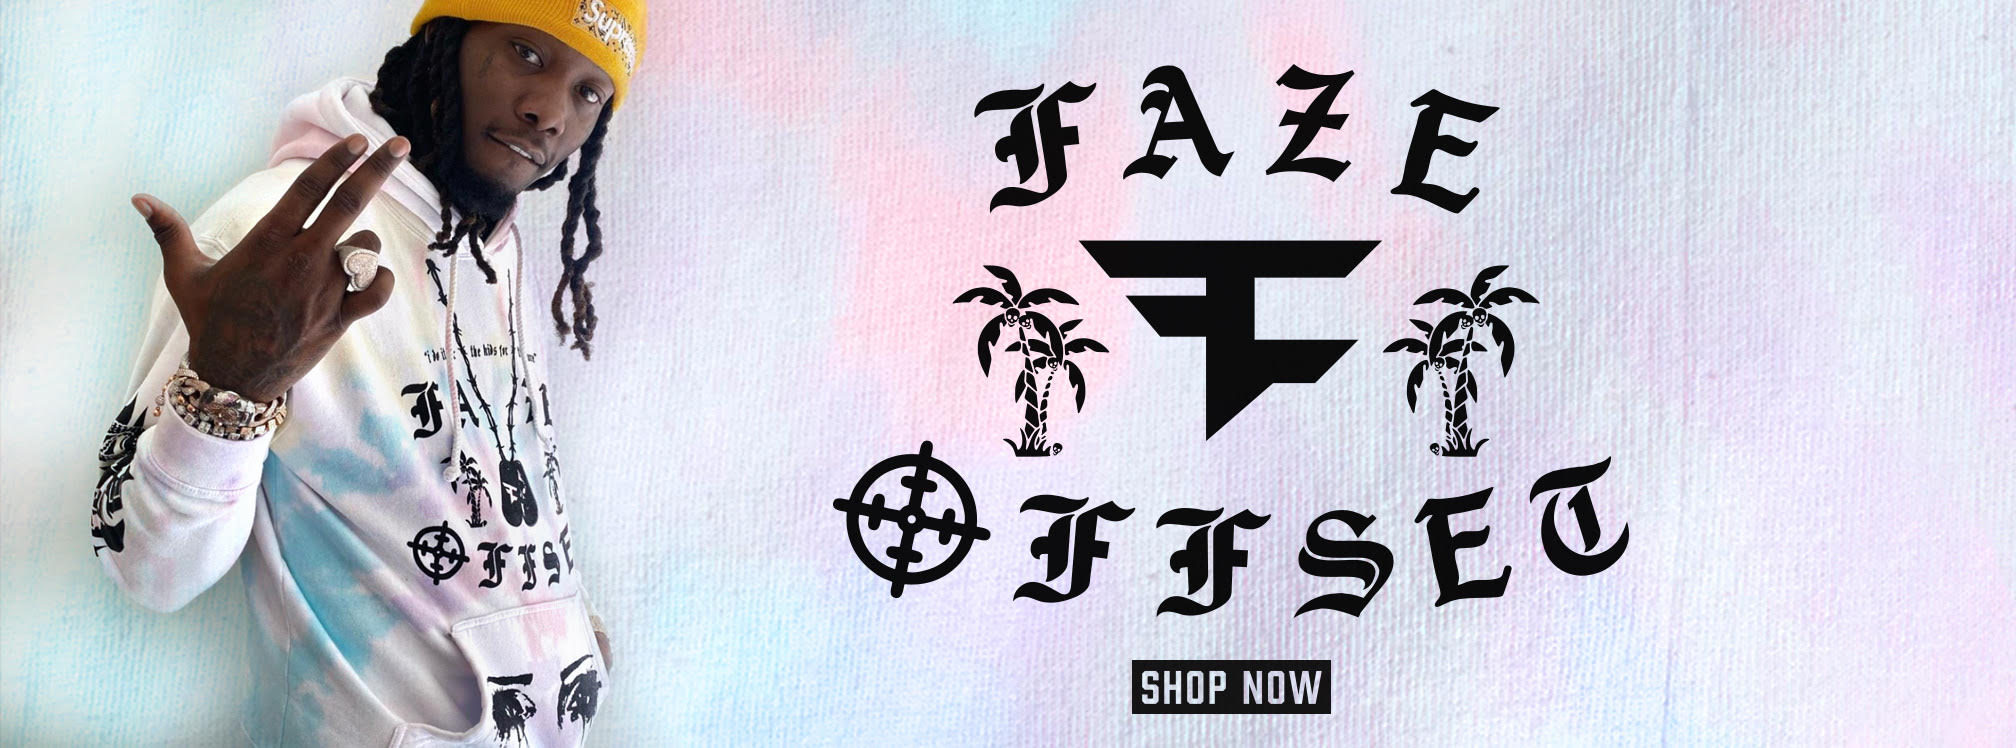 FaZe Clan Offset Collection